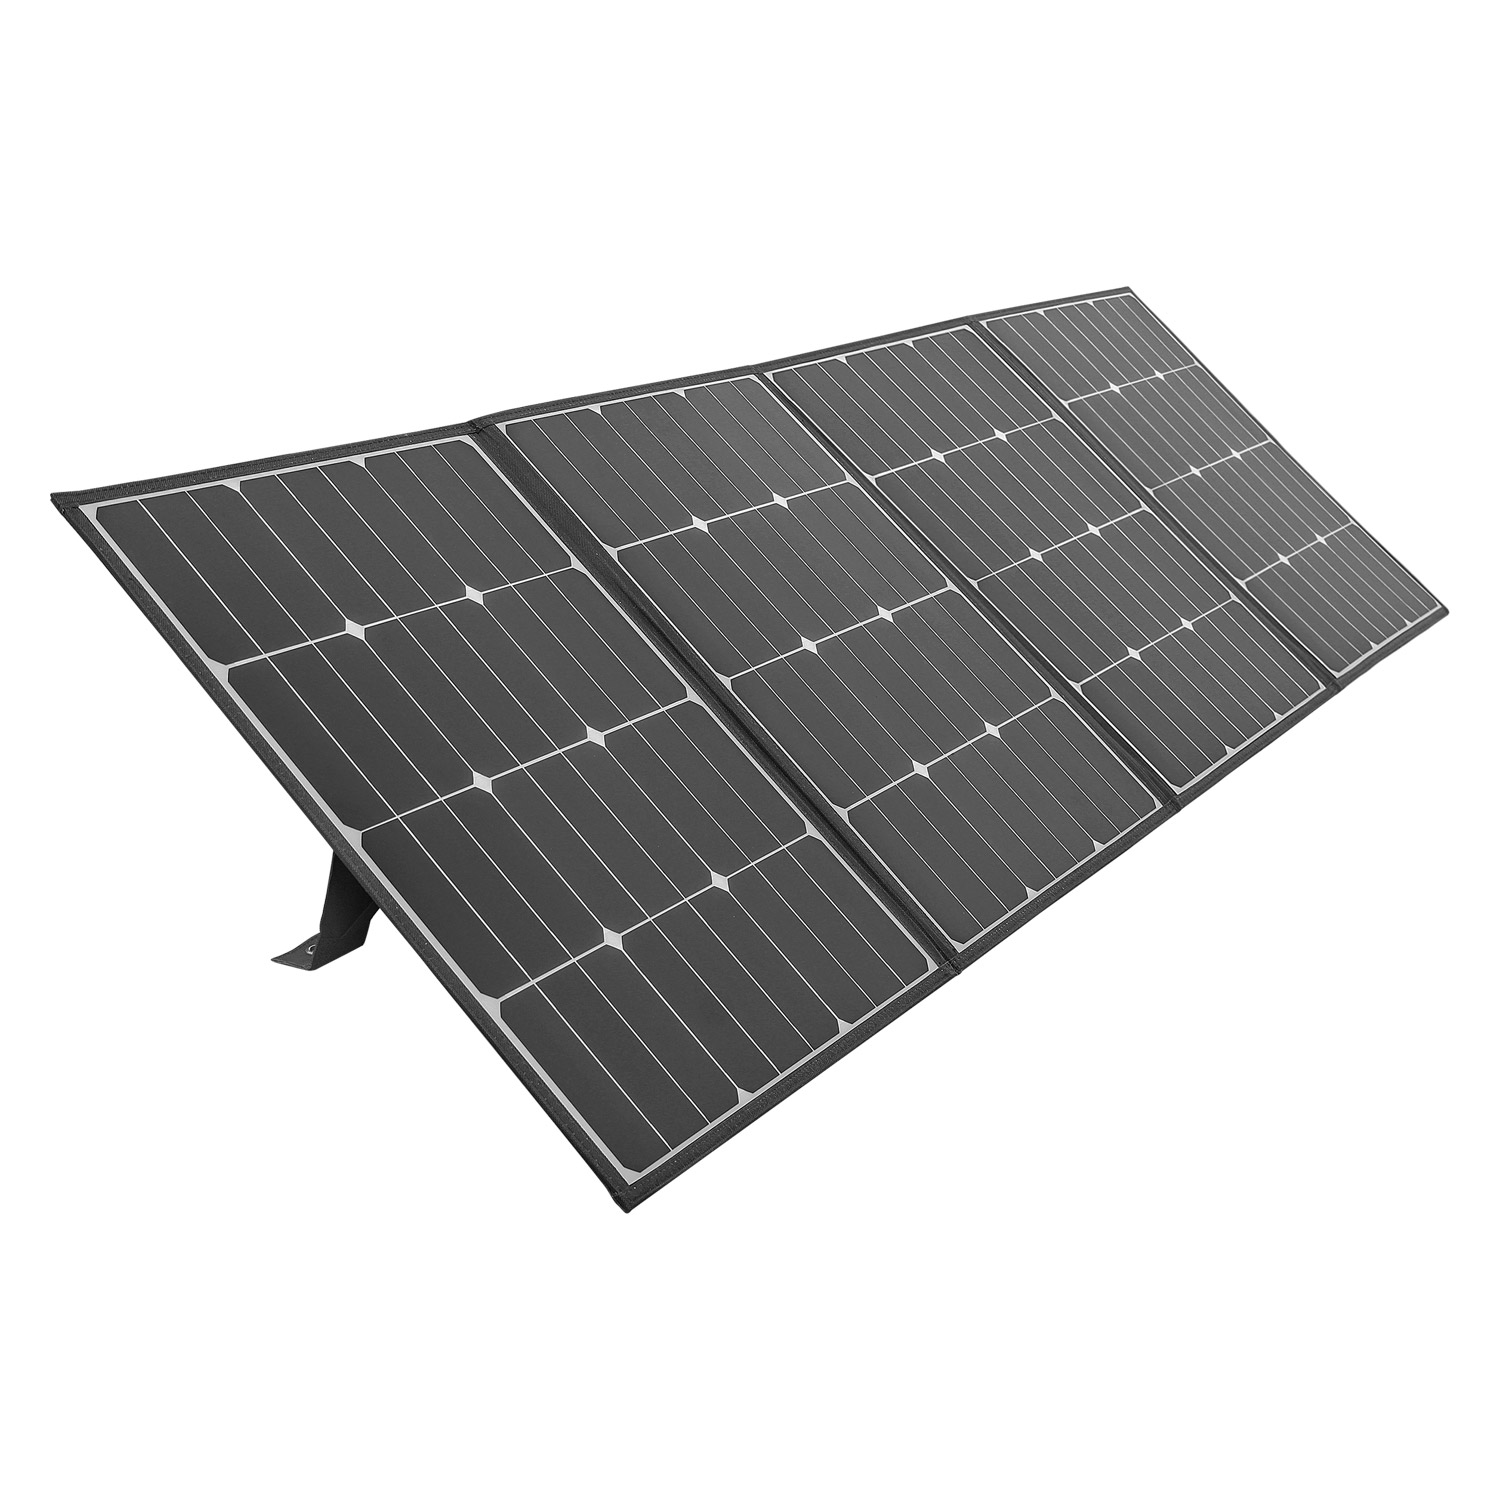 Voltero  Voltero S200 solar panel 200W / 18V with SunPower cell